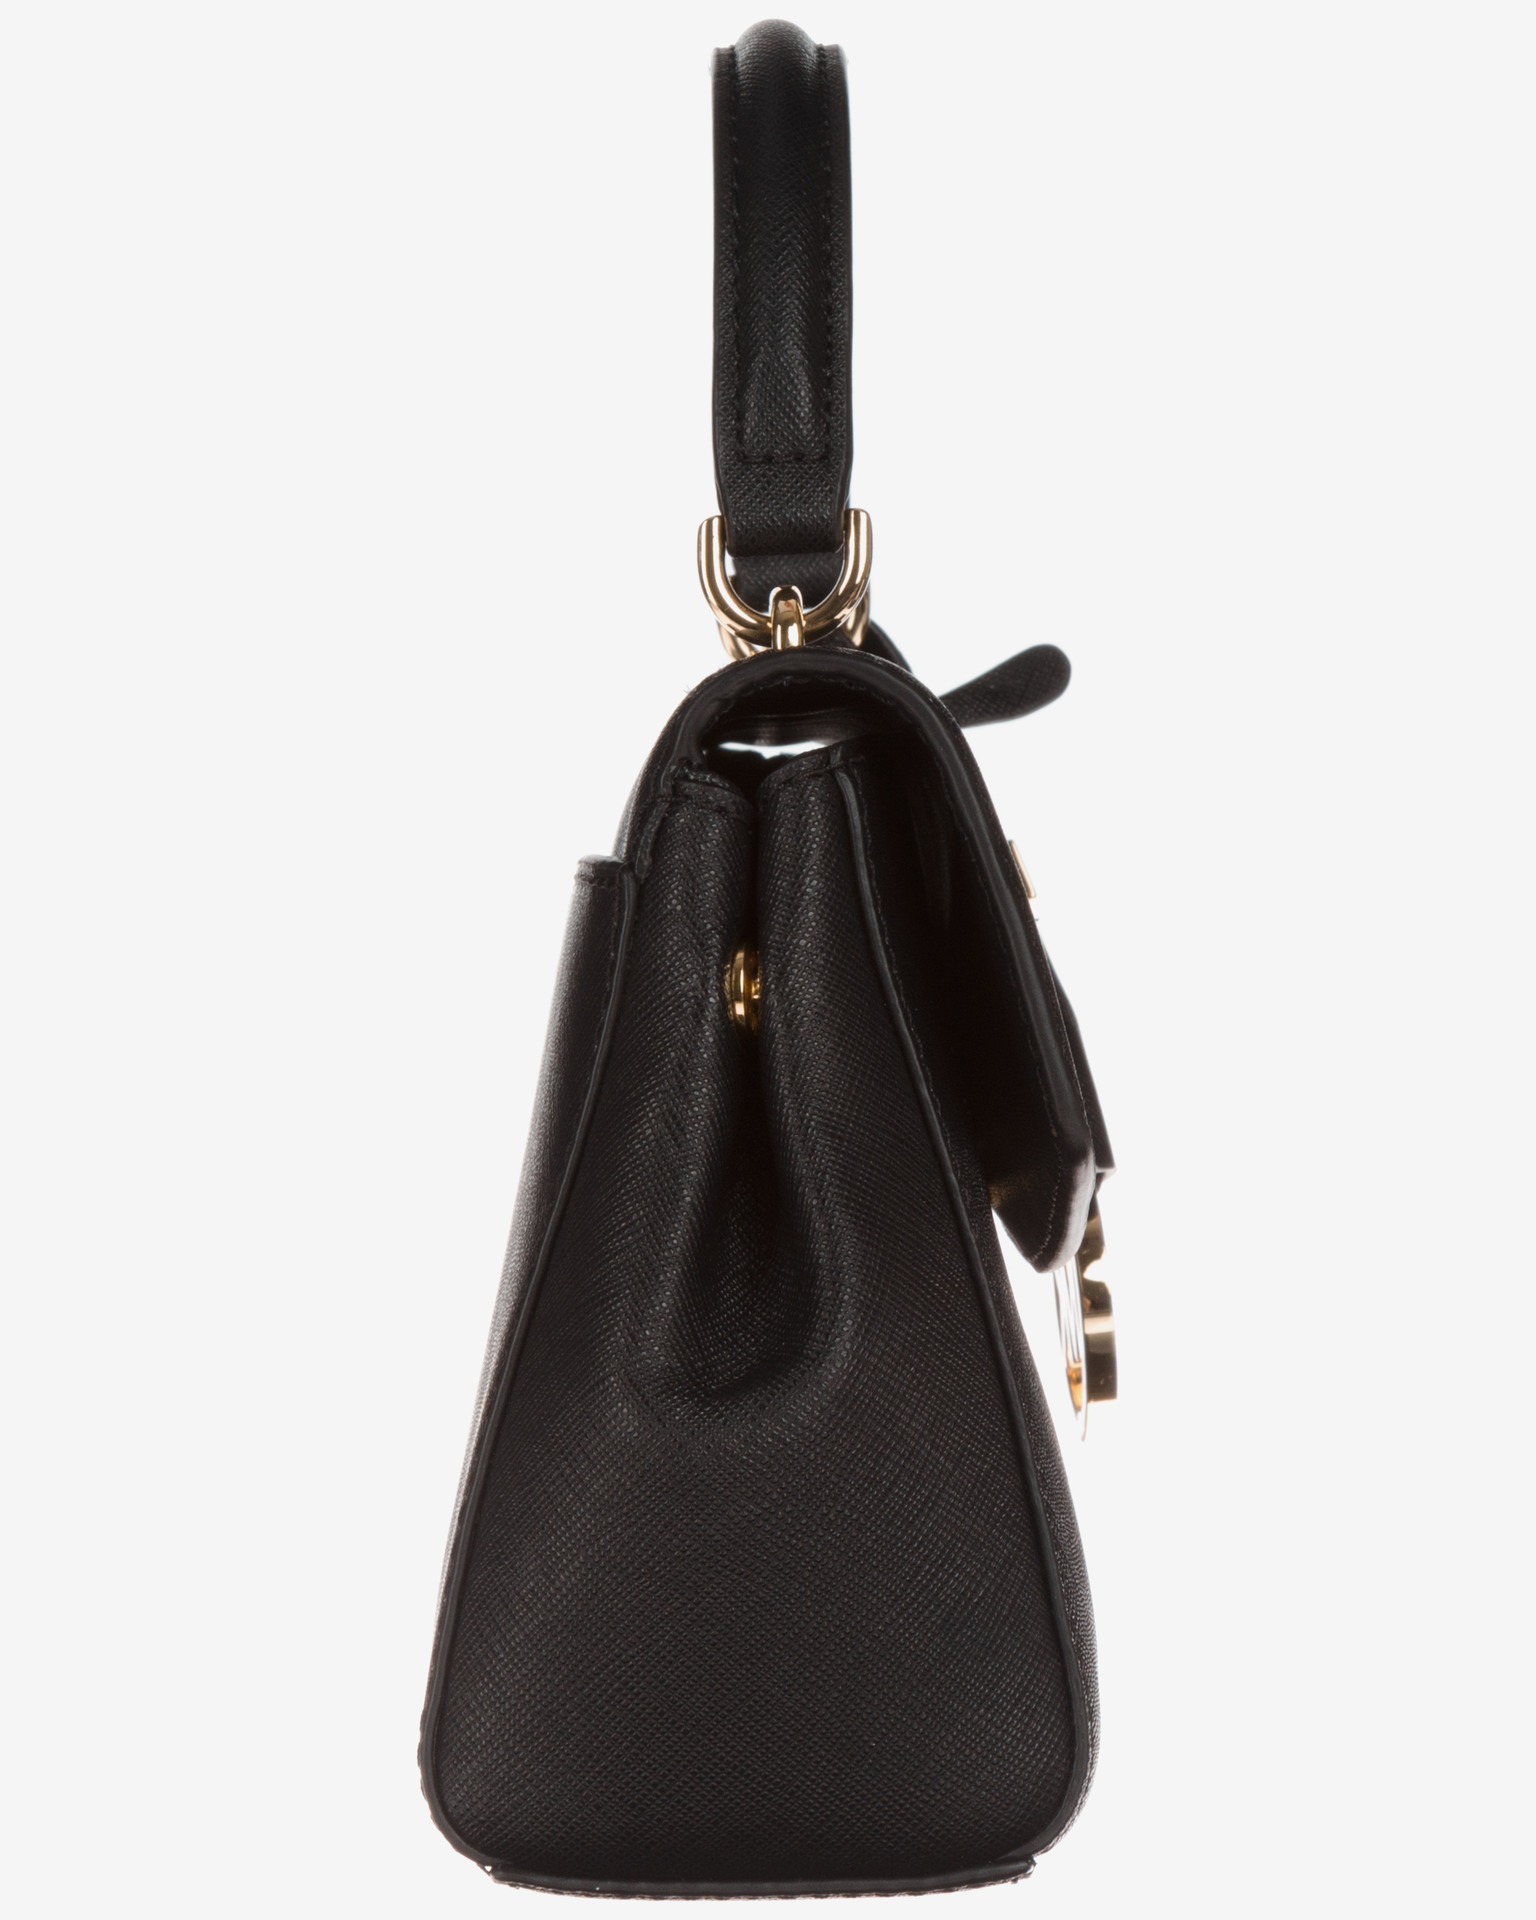 Michael Kors - Authenticated Ava Handbag - Leather Black Plain for Women, Never Worn